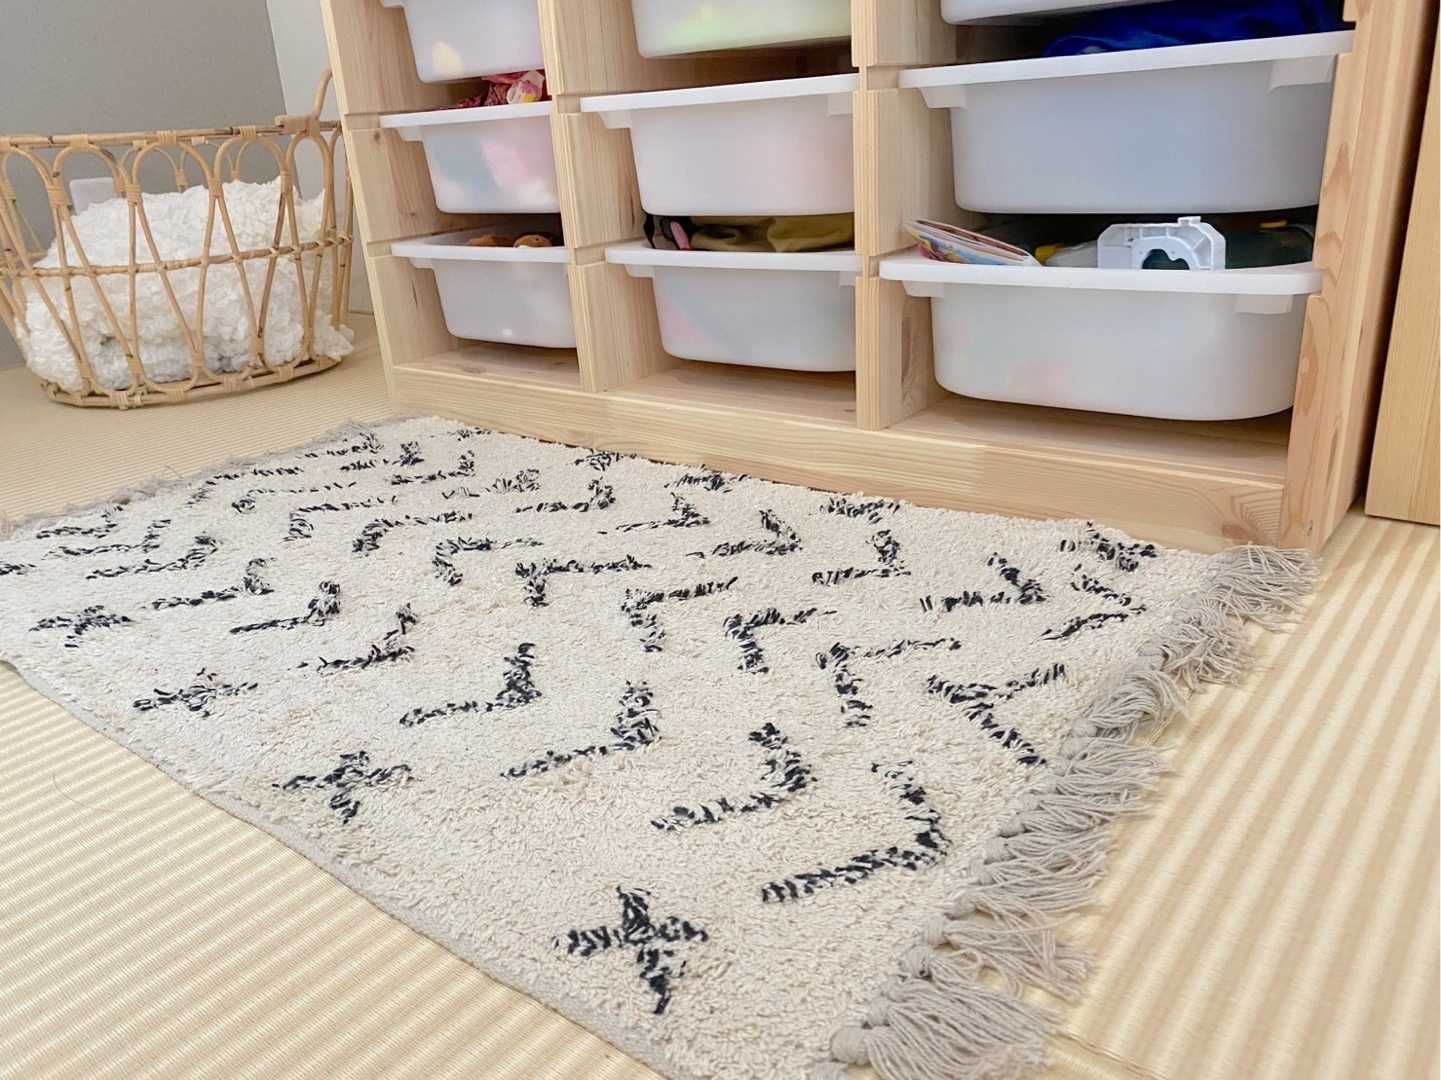 IKEAグッズで和室を子供部屋にしました！ | rice_homeのブログ - 楽天ブログ